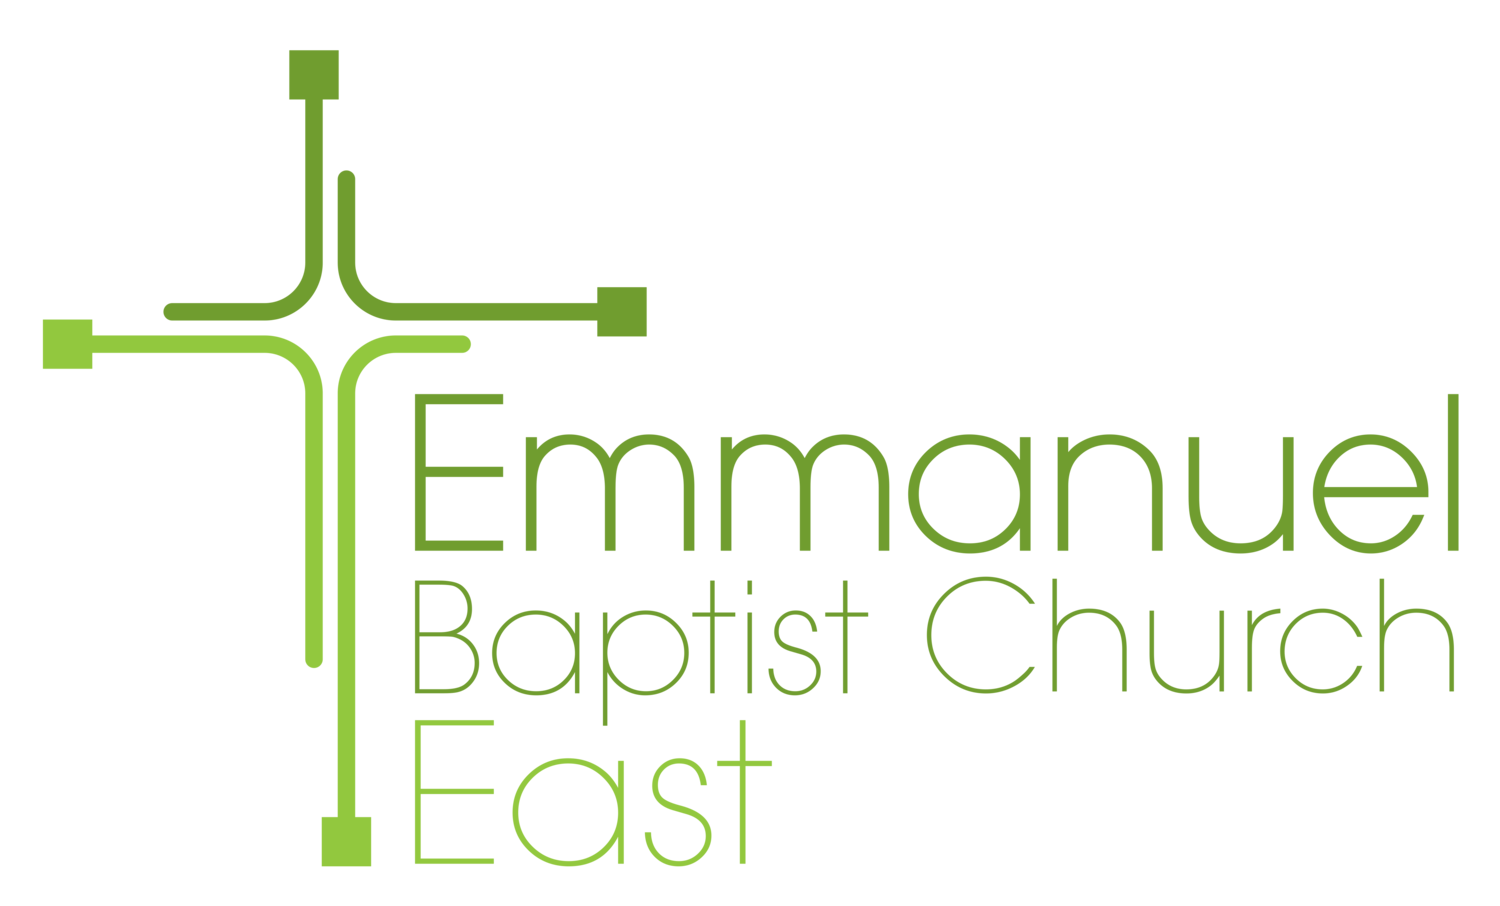 Emmanuel Baptist Church East